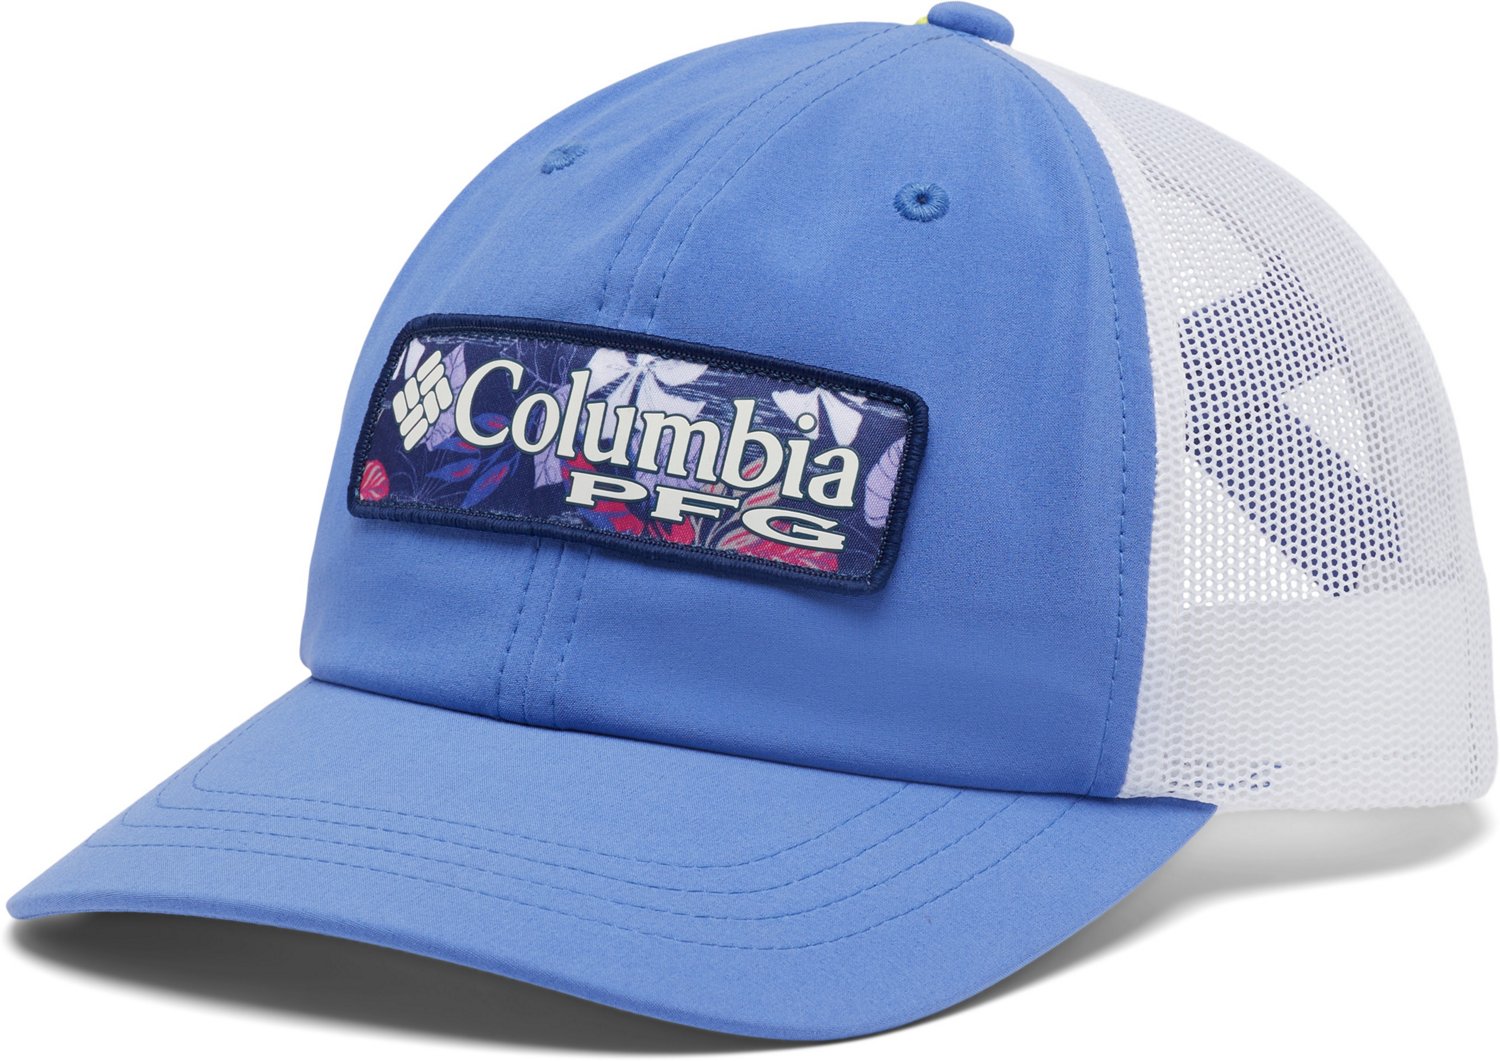 Columbia Sportswear Women's Pony Tail Patch Baseball Cap